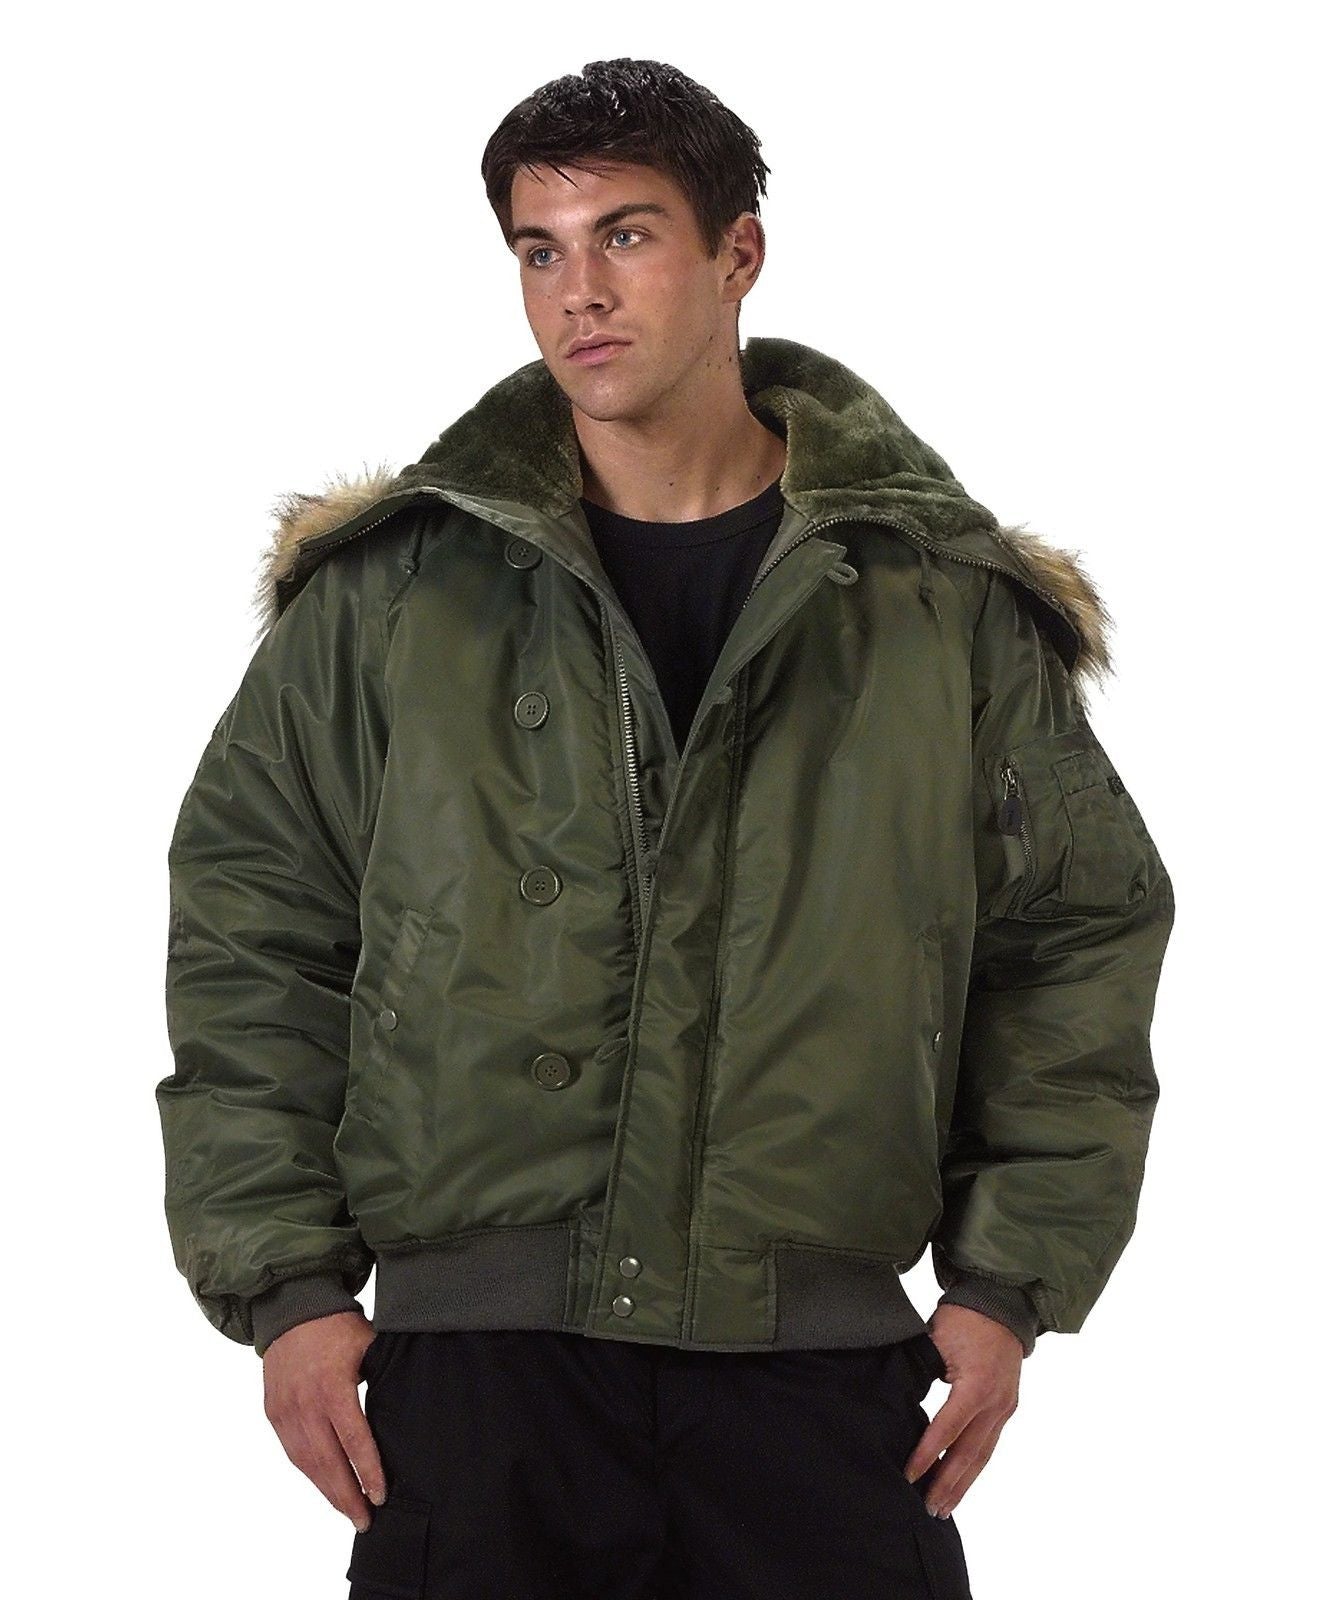 Men's Tactical Winter Coat - Black or Sage Military N-2B Flight Jacket ...